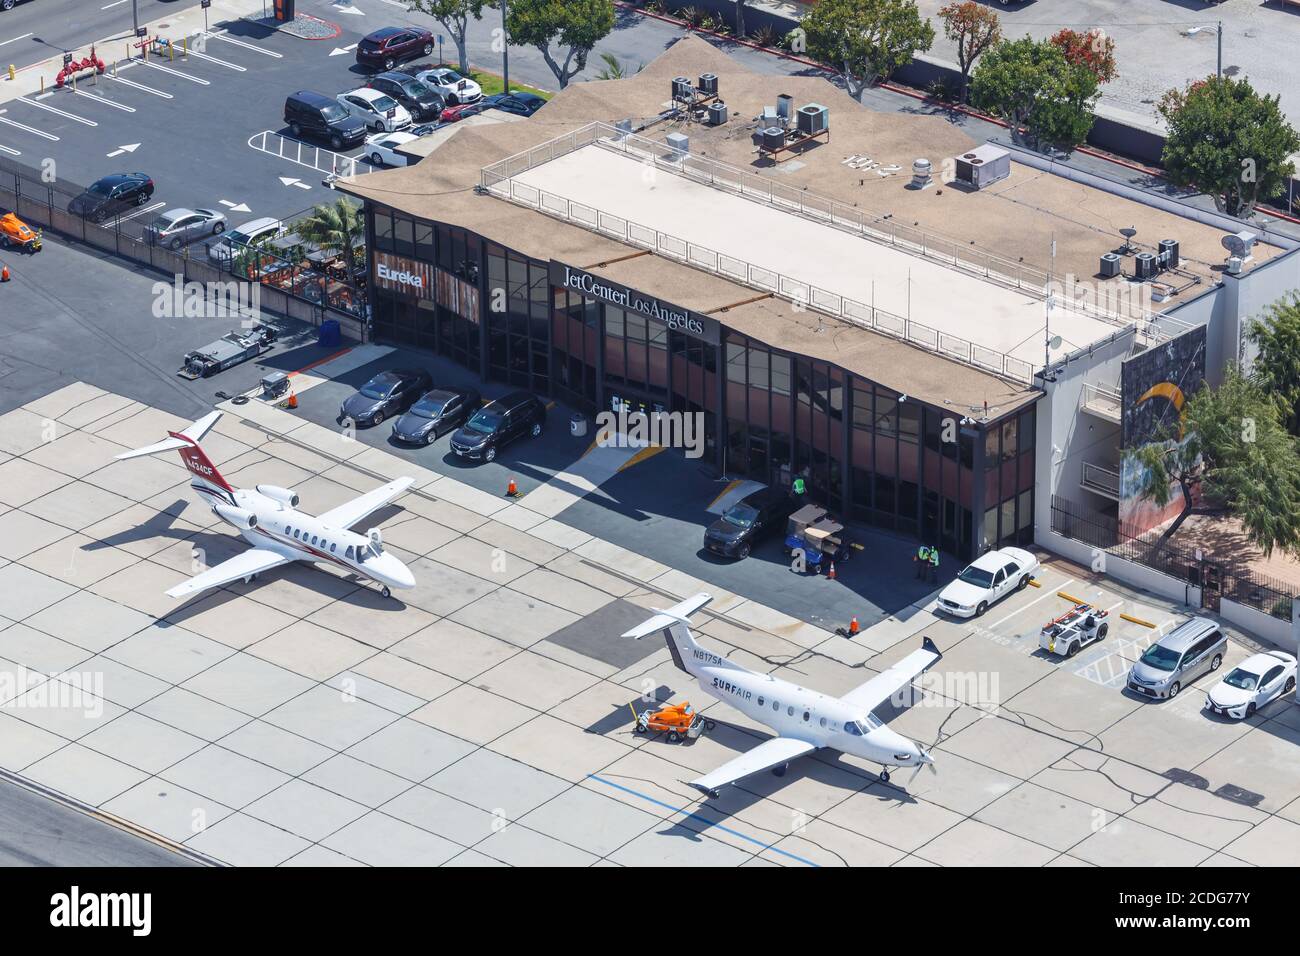 Los Angeles, California - April 14, 2019: SurfAir Pilatus PC-12 airplane aircraft Hawthorne Municipal Airport in California. Stock Photo